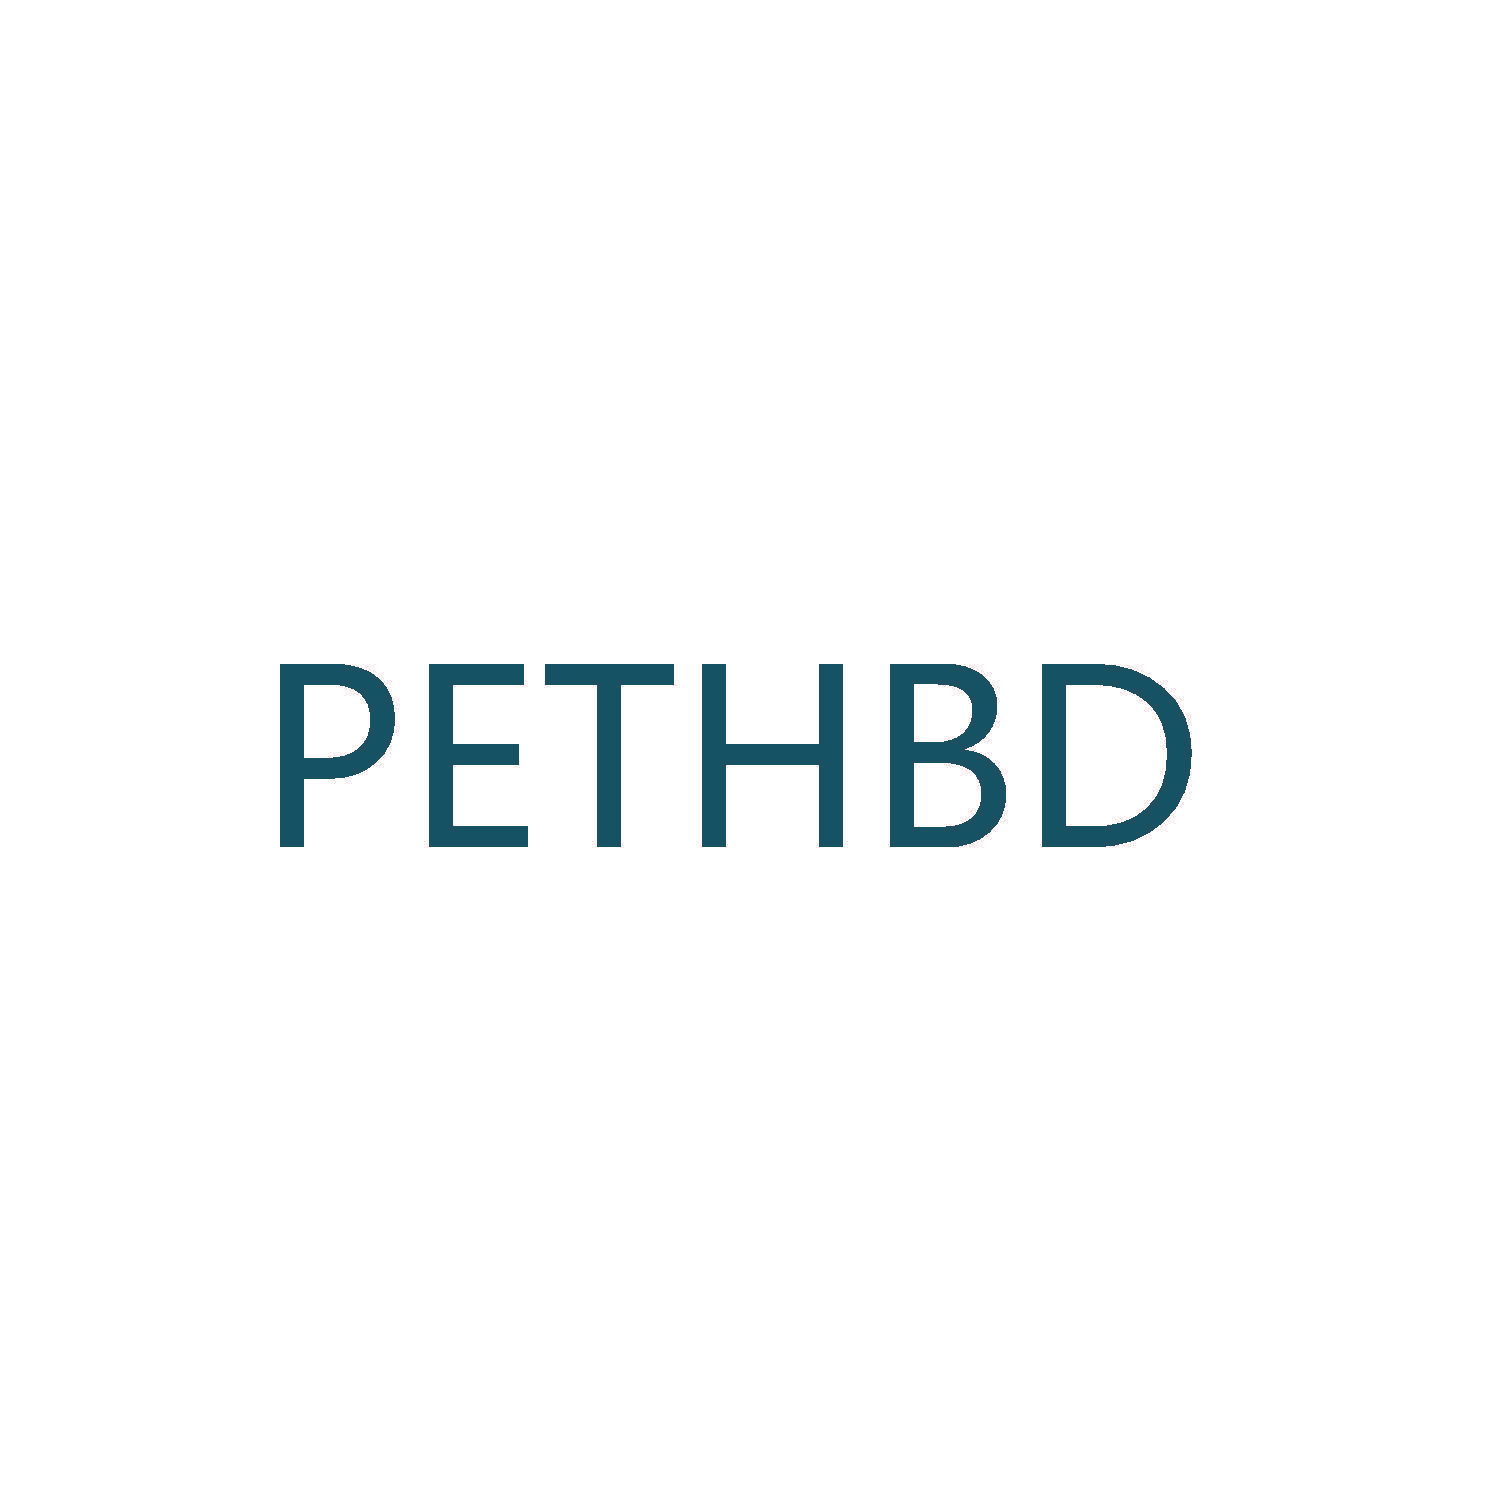 PETHBD